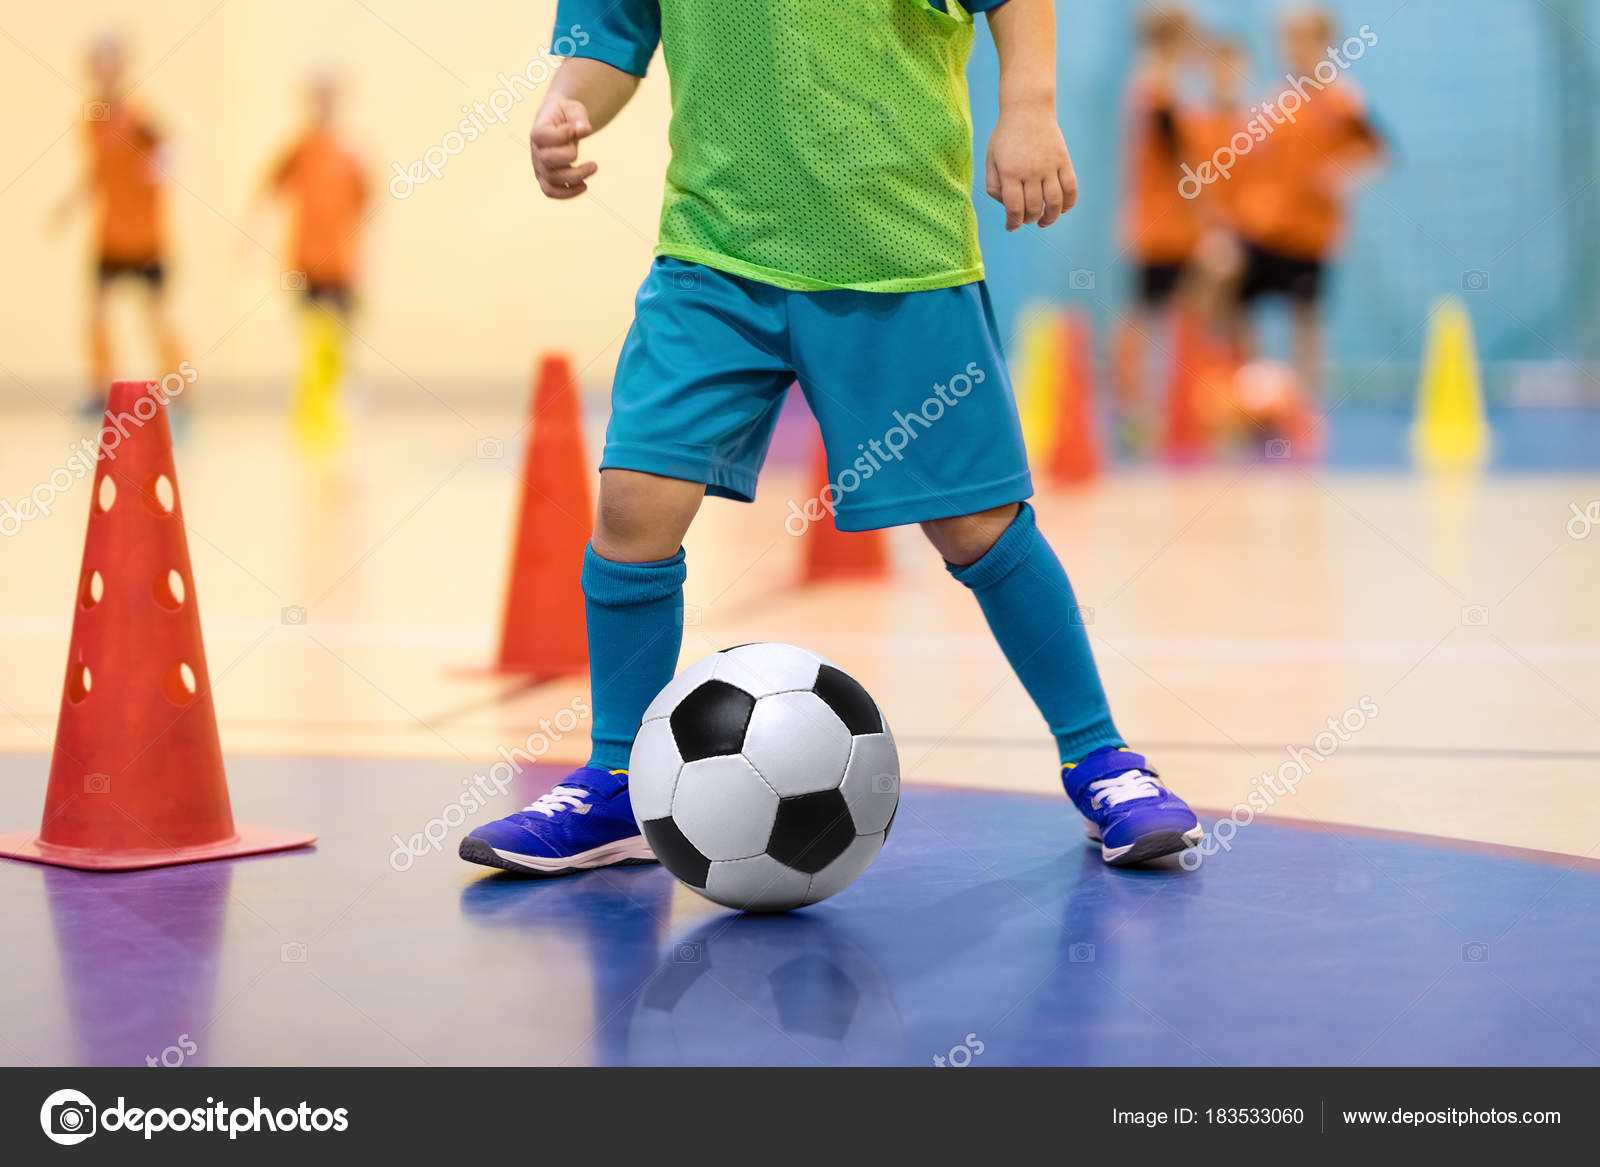 https://st3.depositphotos.com/4318427/18353/i/1600/depositphotos_183533060-stock-photo-football-futsal-training-for-children.jpg